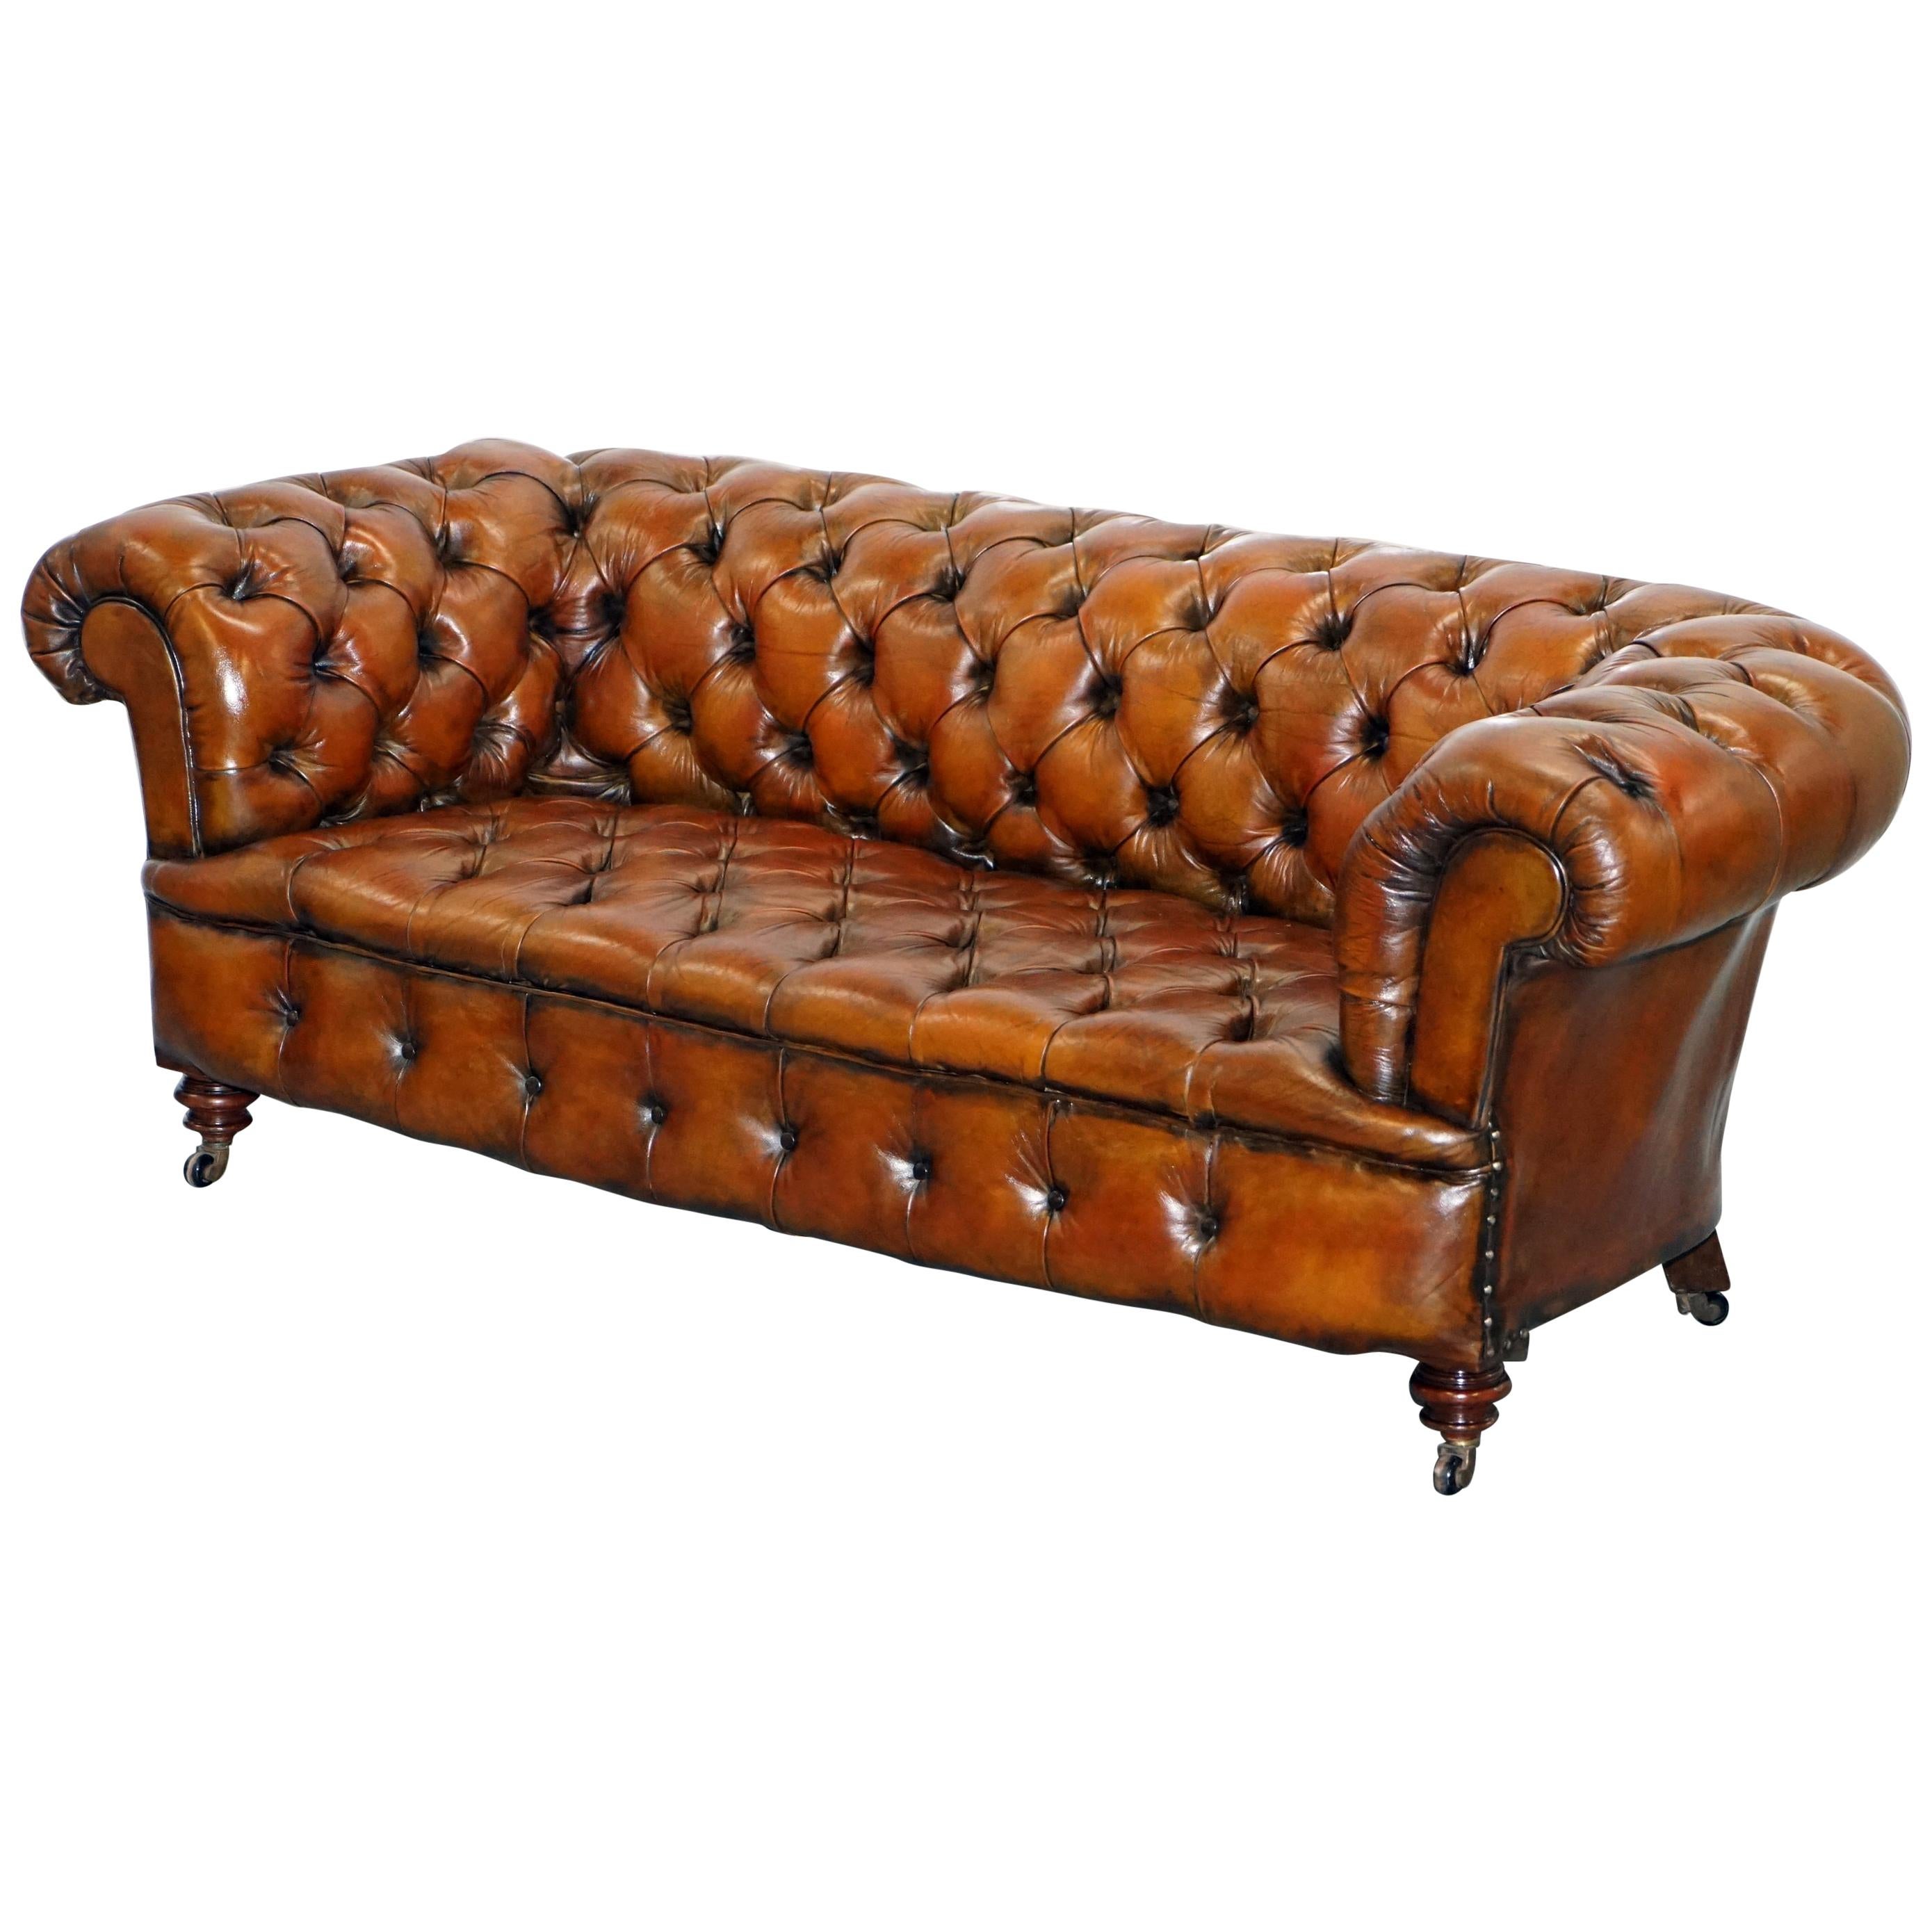 Canapé en cuir marron restauré de style victorien 1890 Cornelius V. Smith Stamp Chesterfield en vente